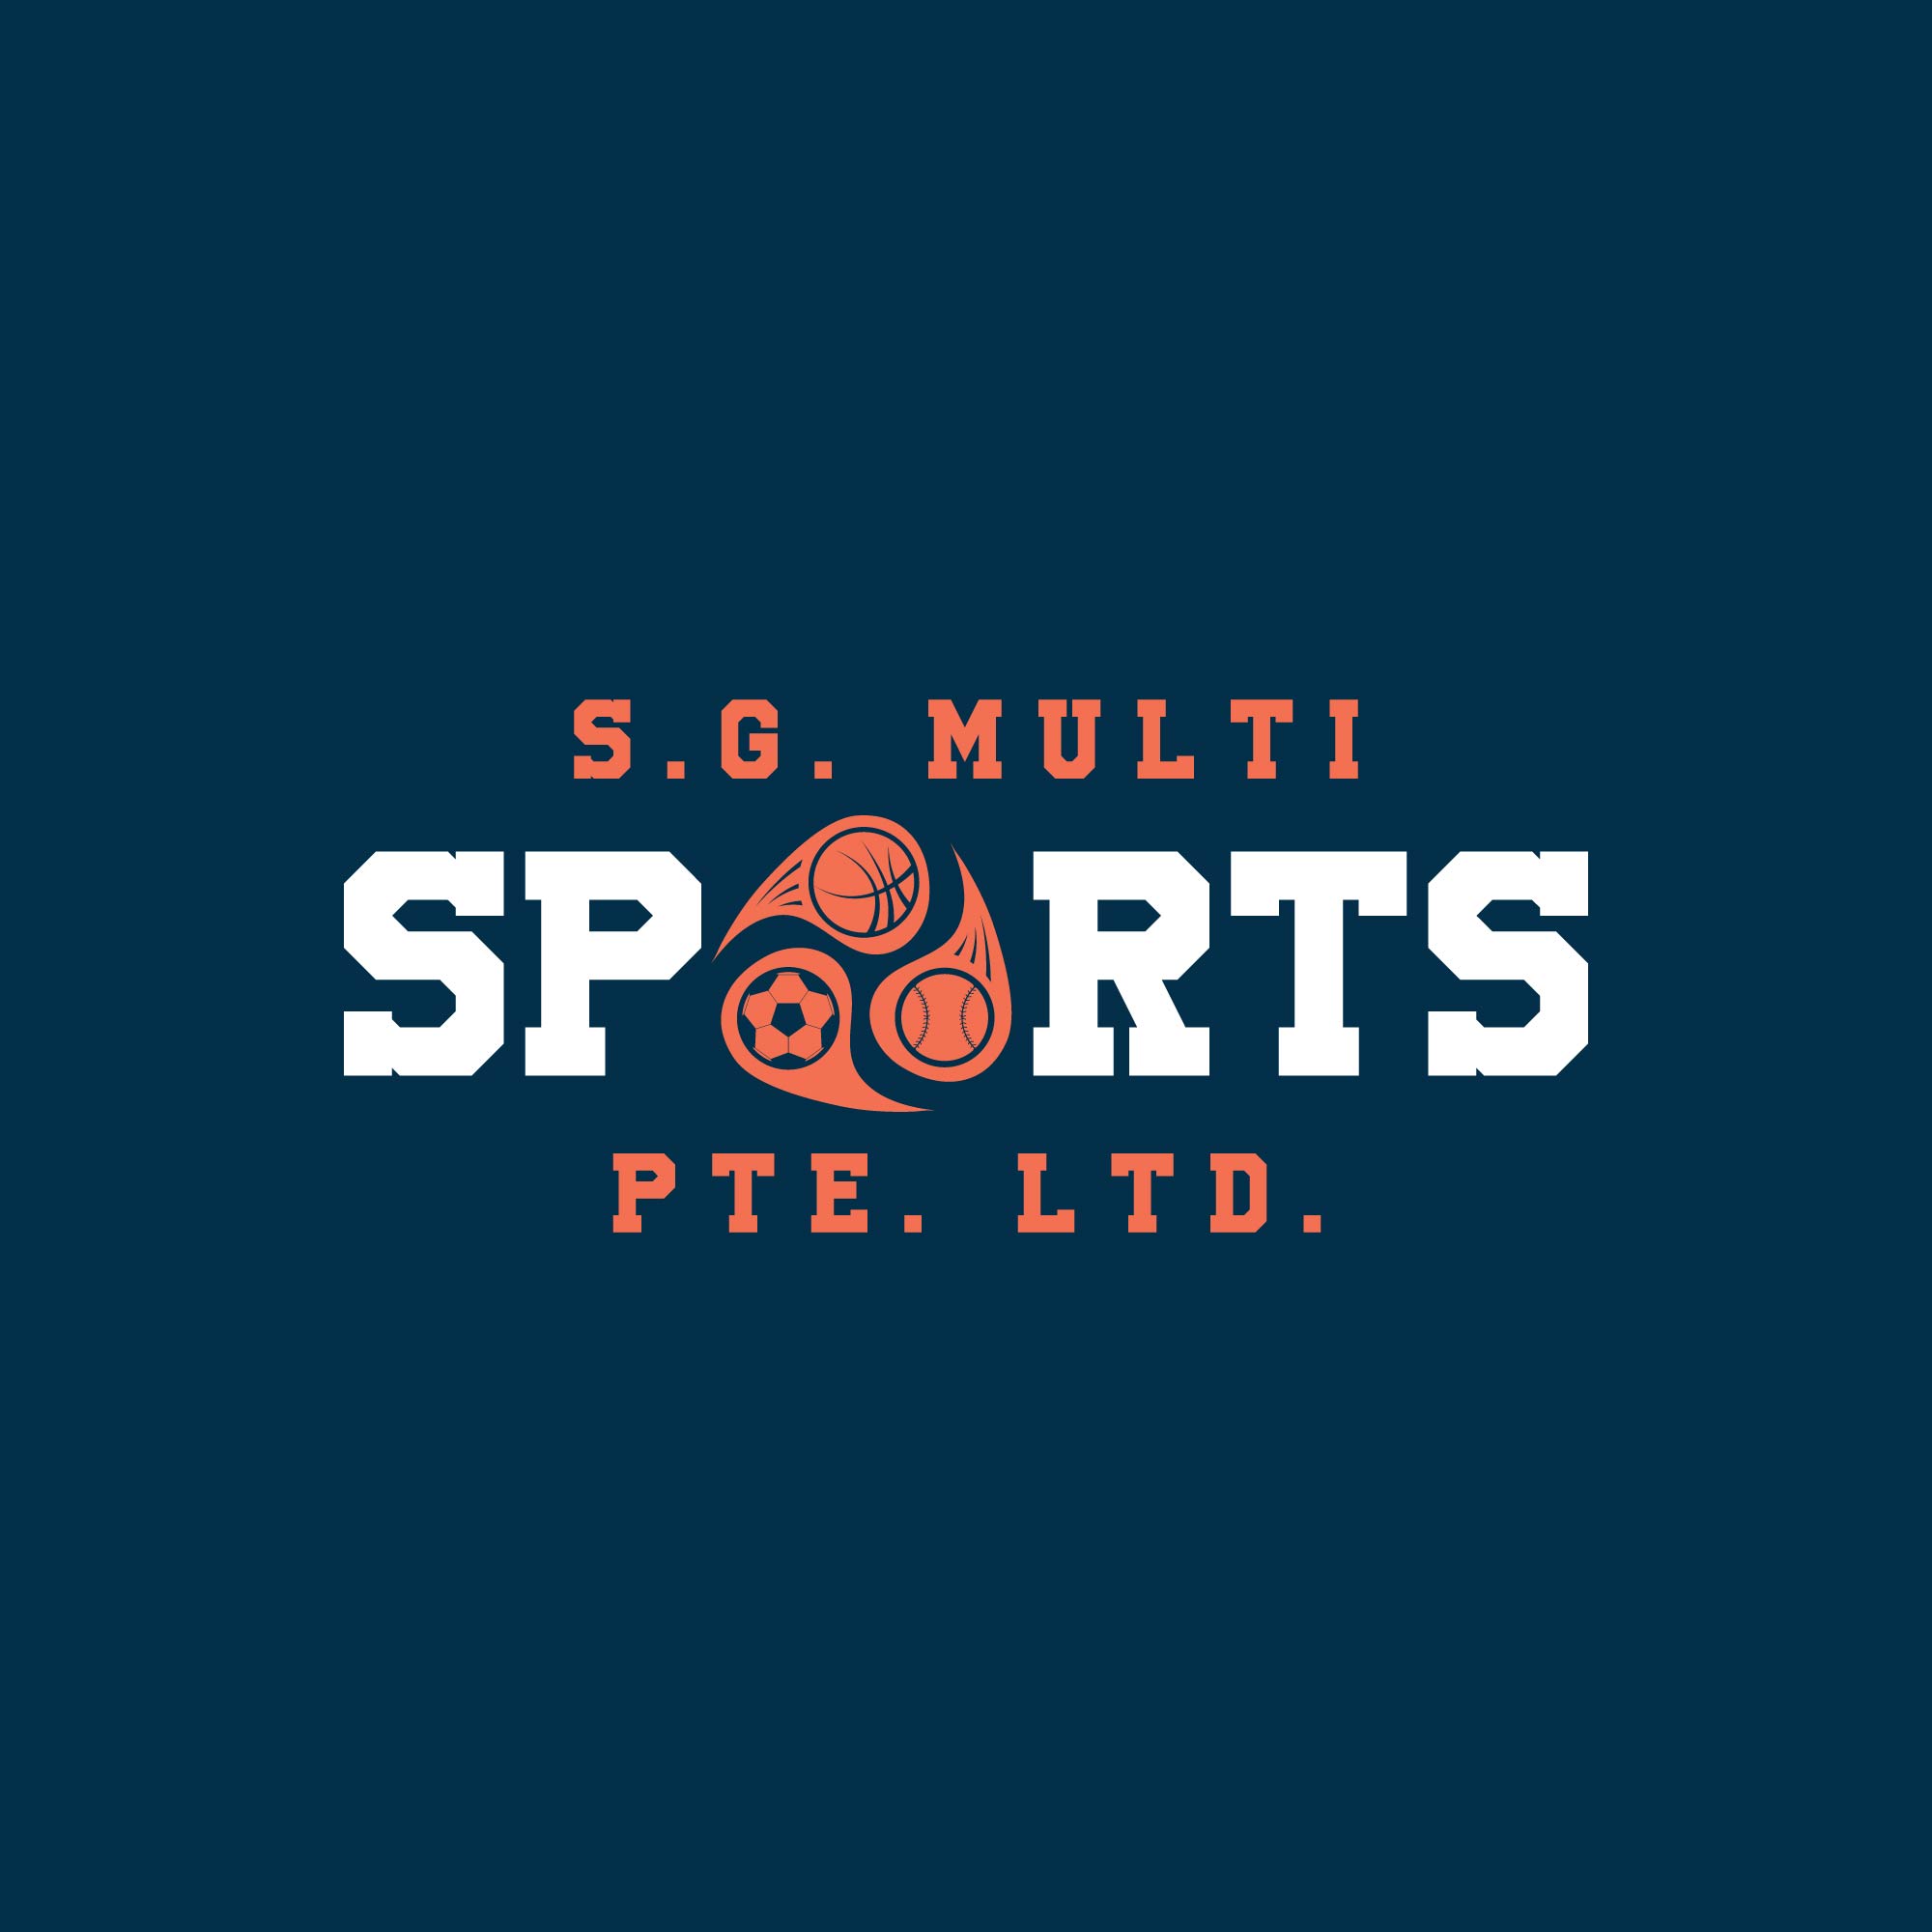 SG MULTI SPORTS PTE. LTD.